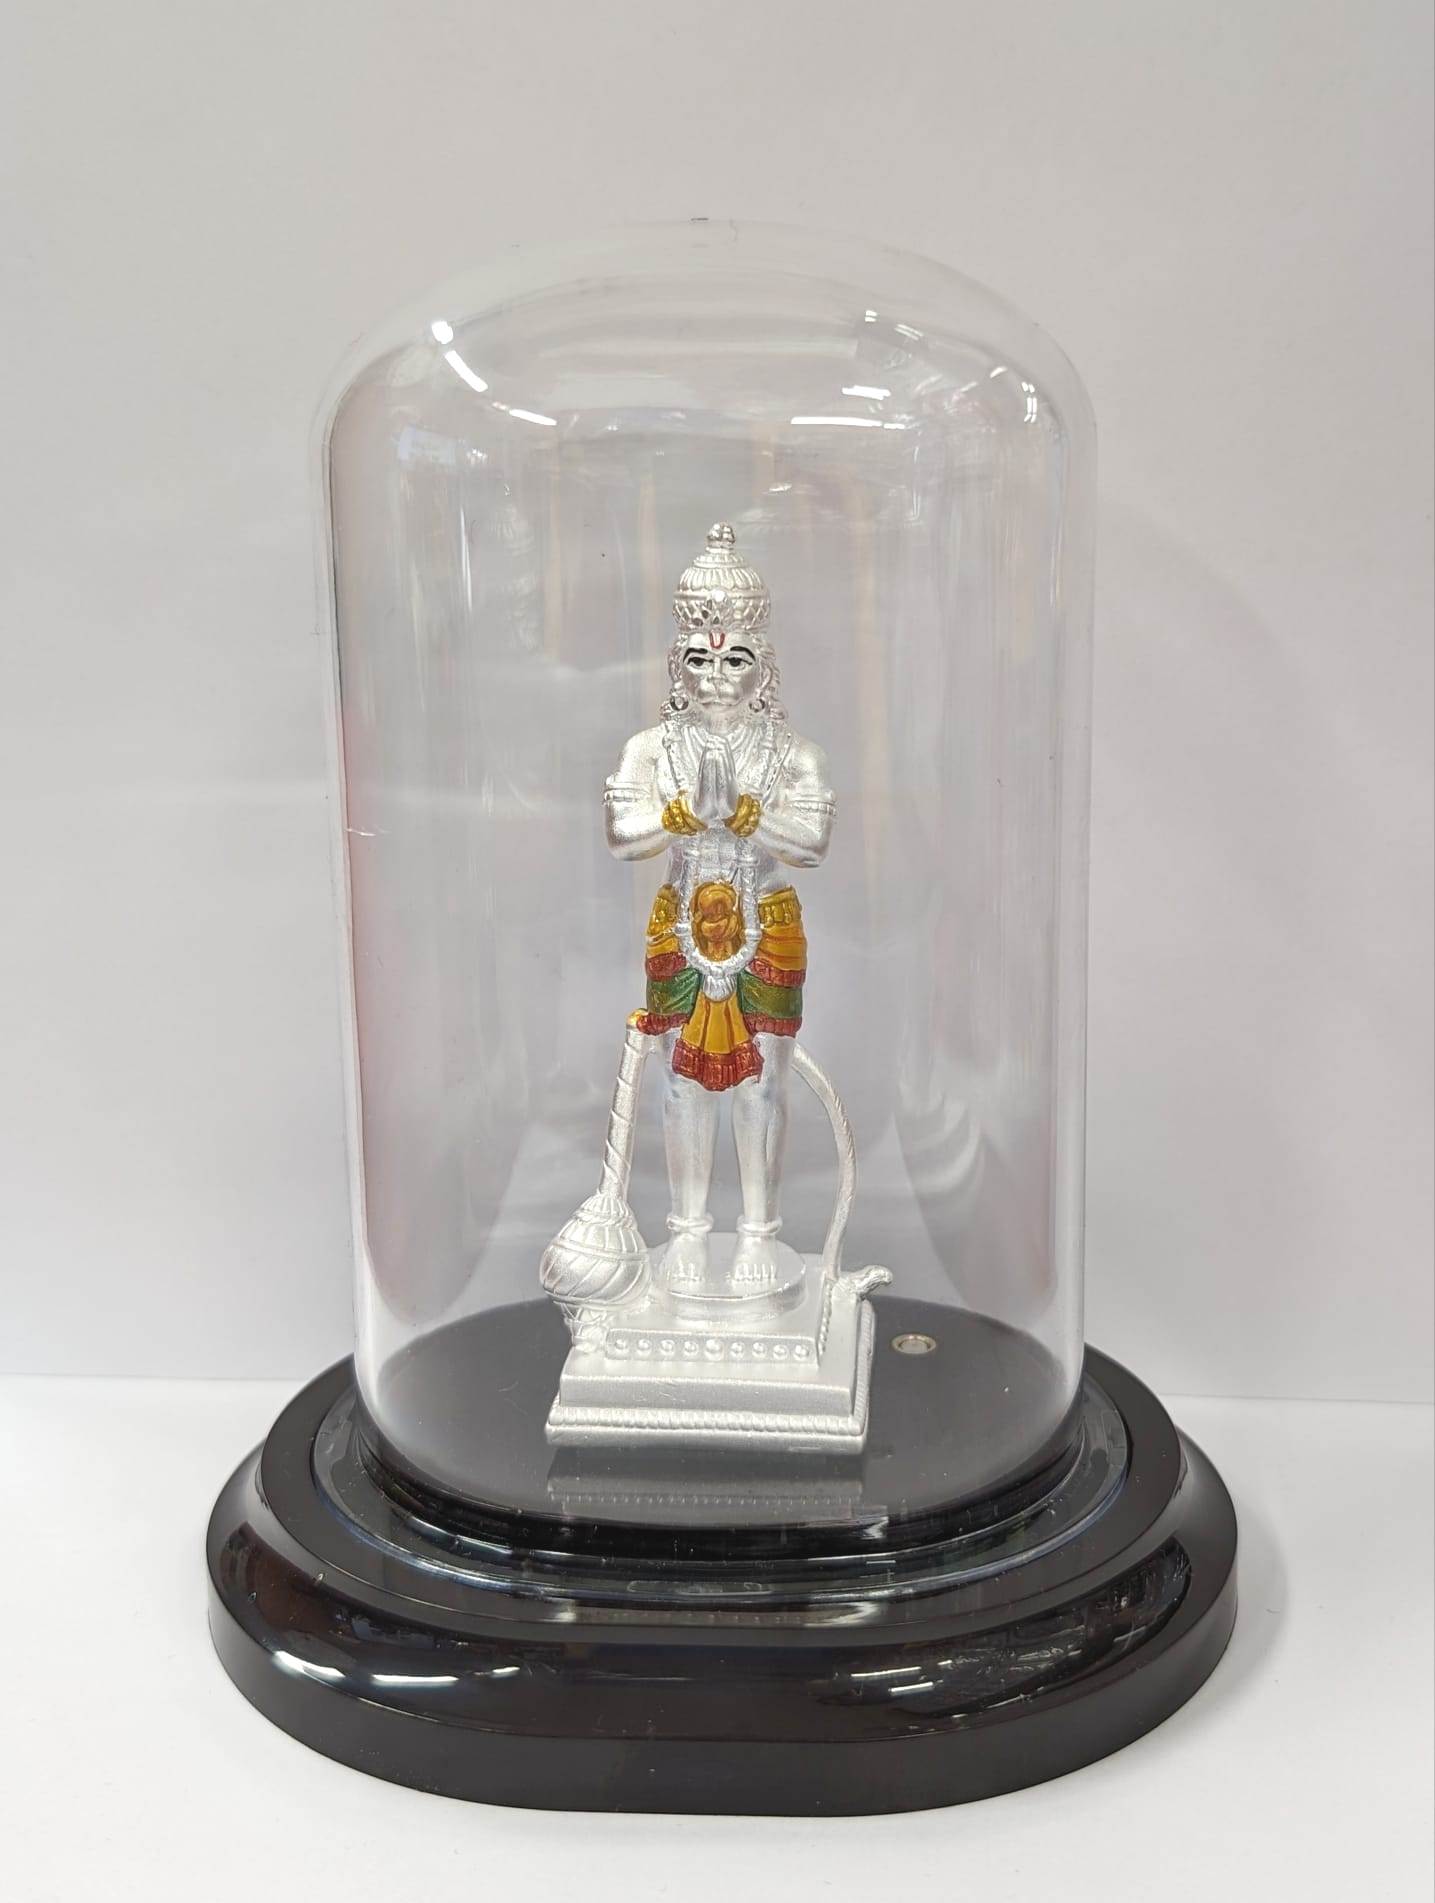 Pure silver Hanuman Idol inside a dome